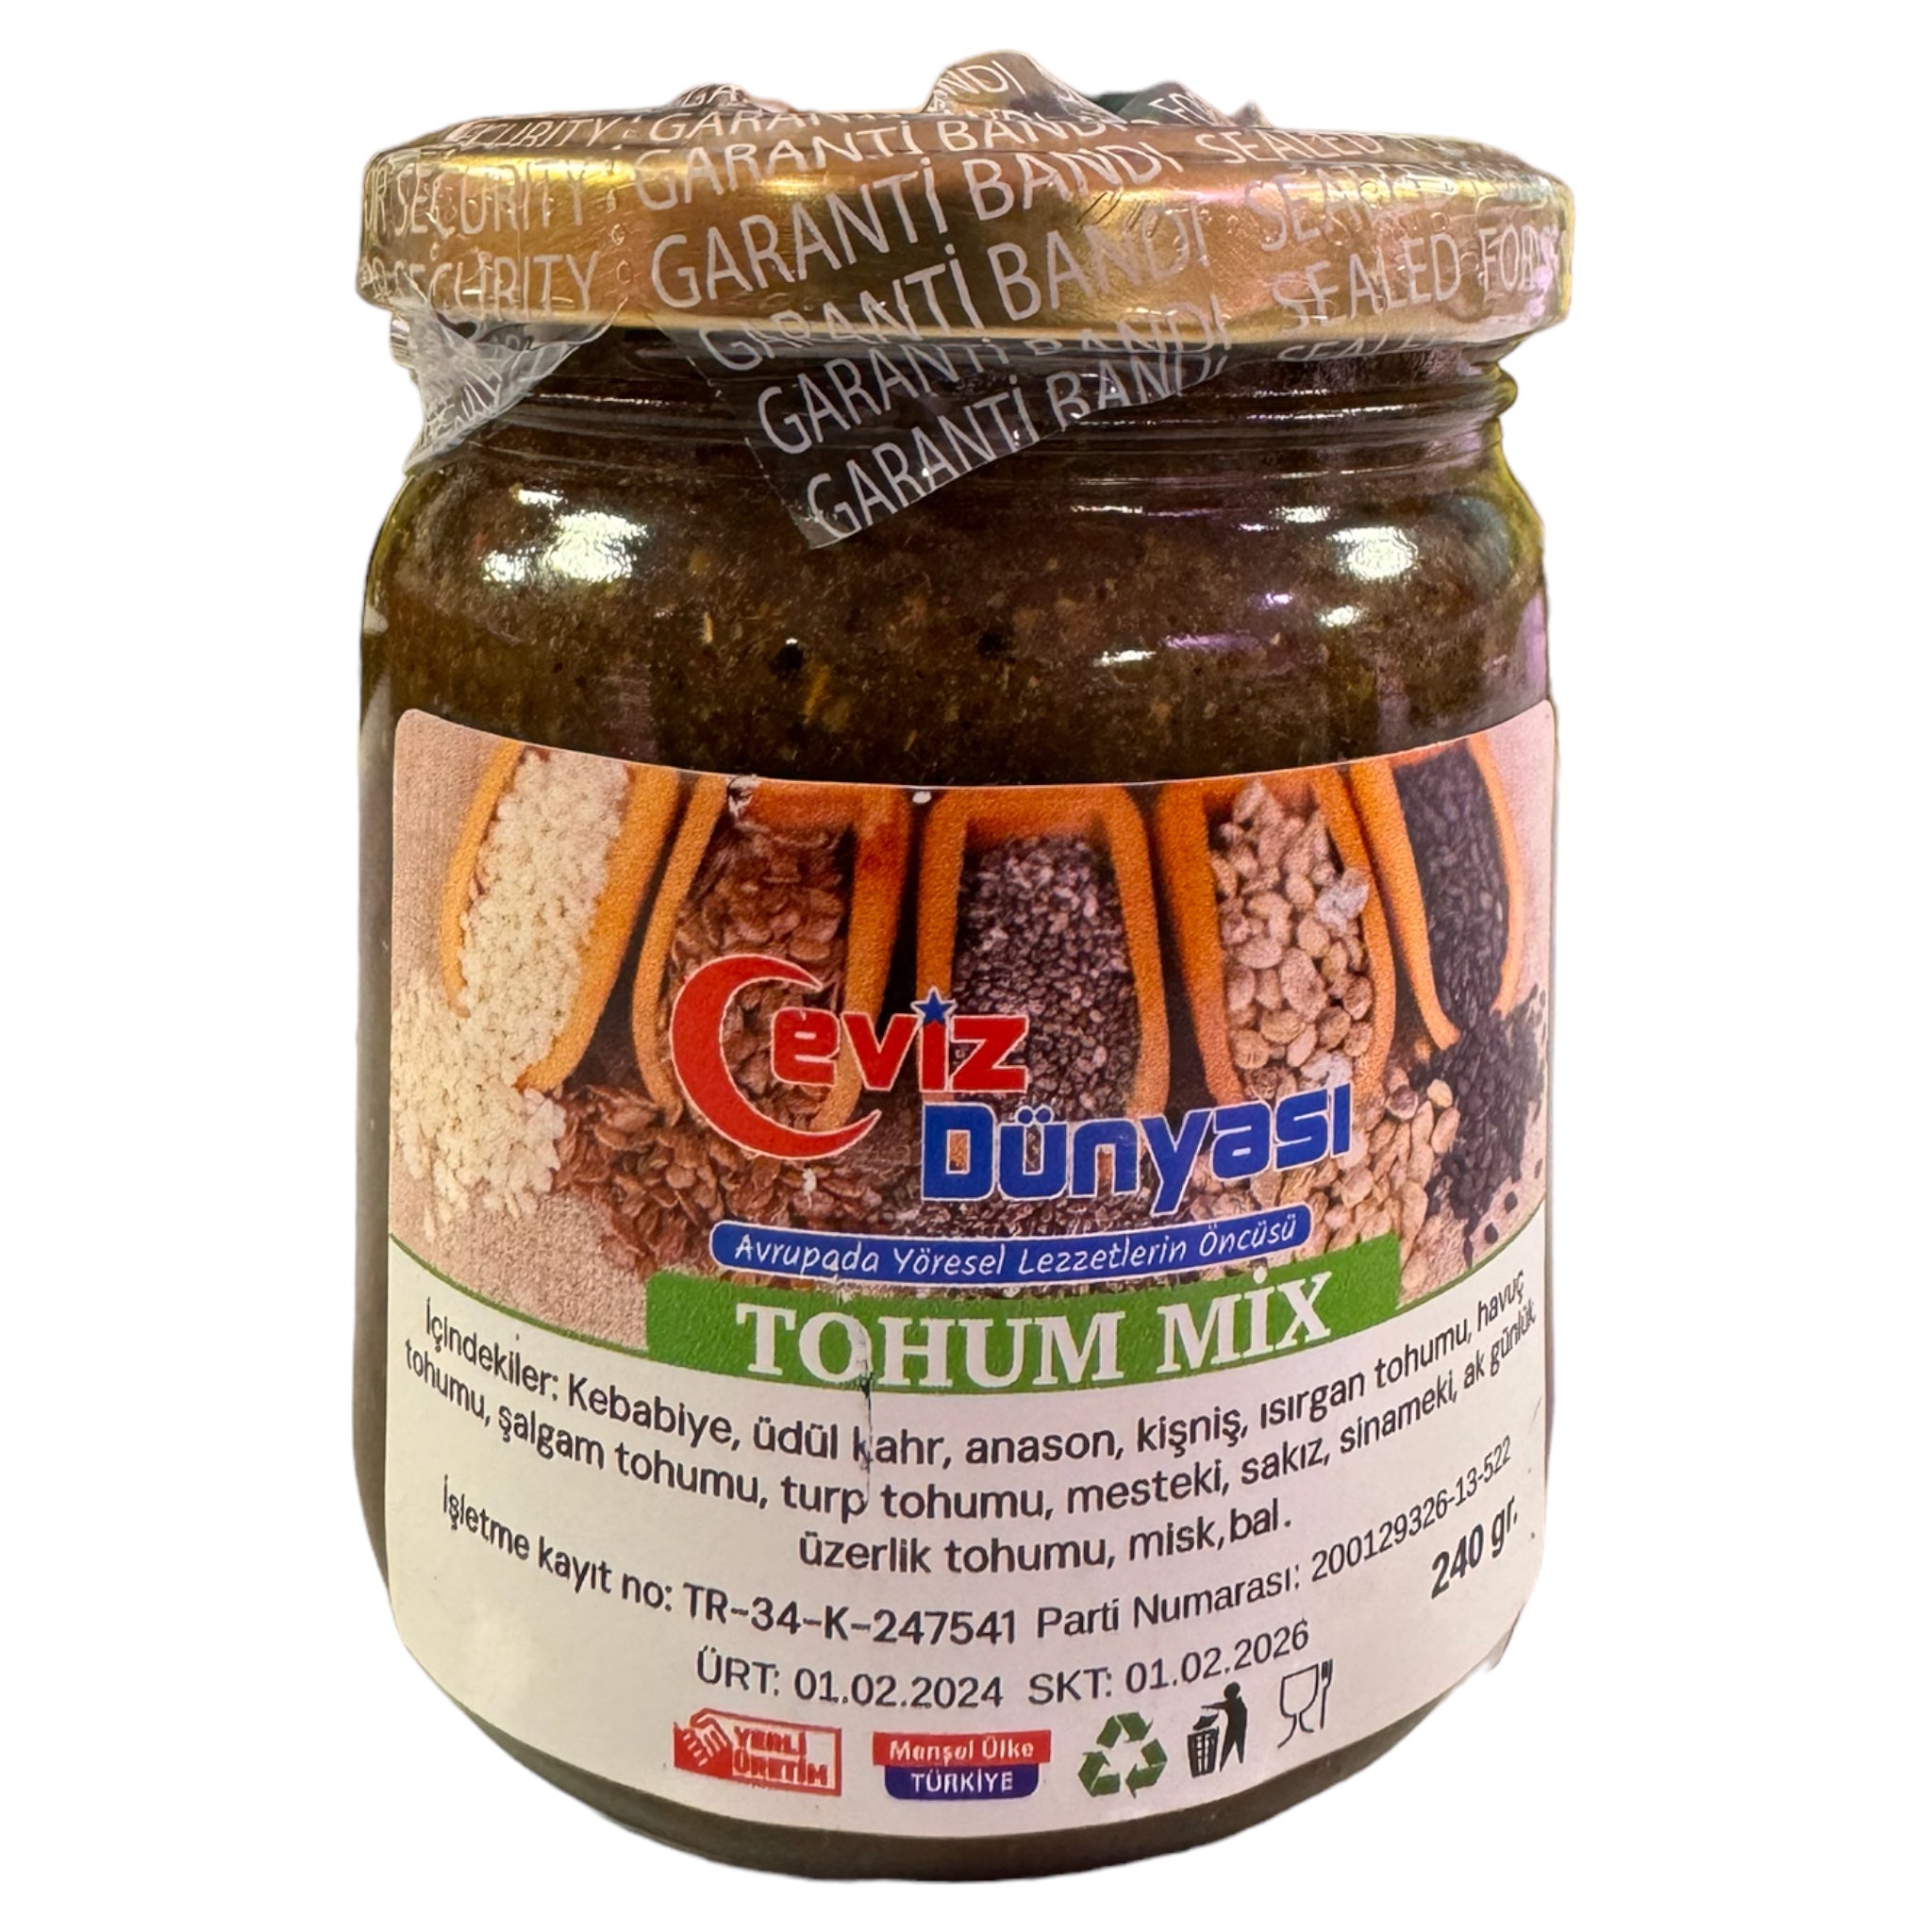 Tohum mix (240g)